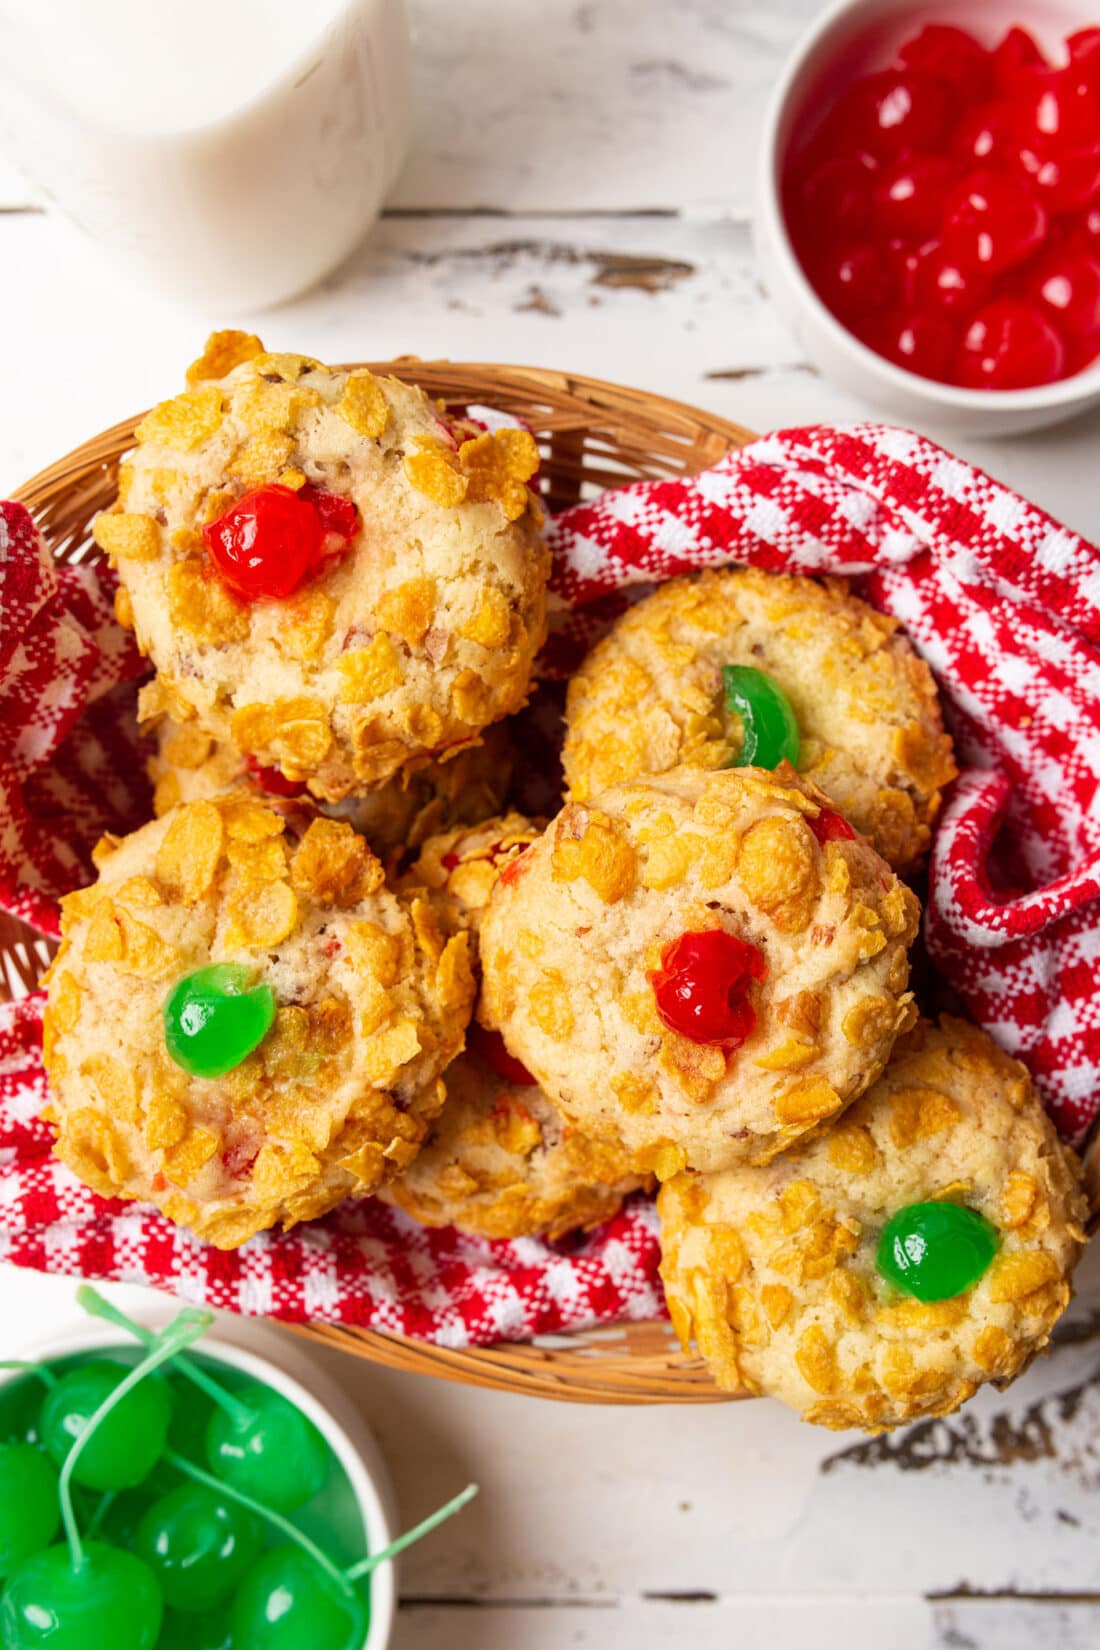 Cherry Wink Cookies in a basket